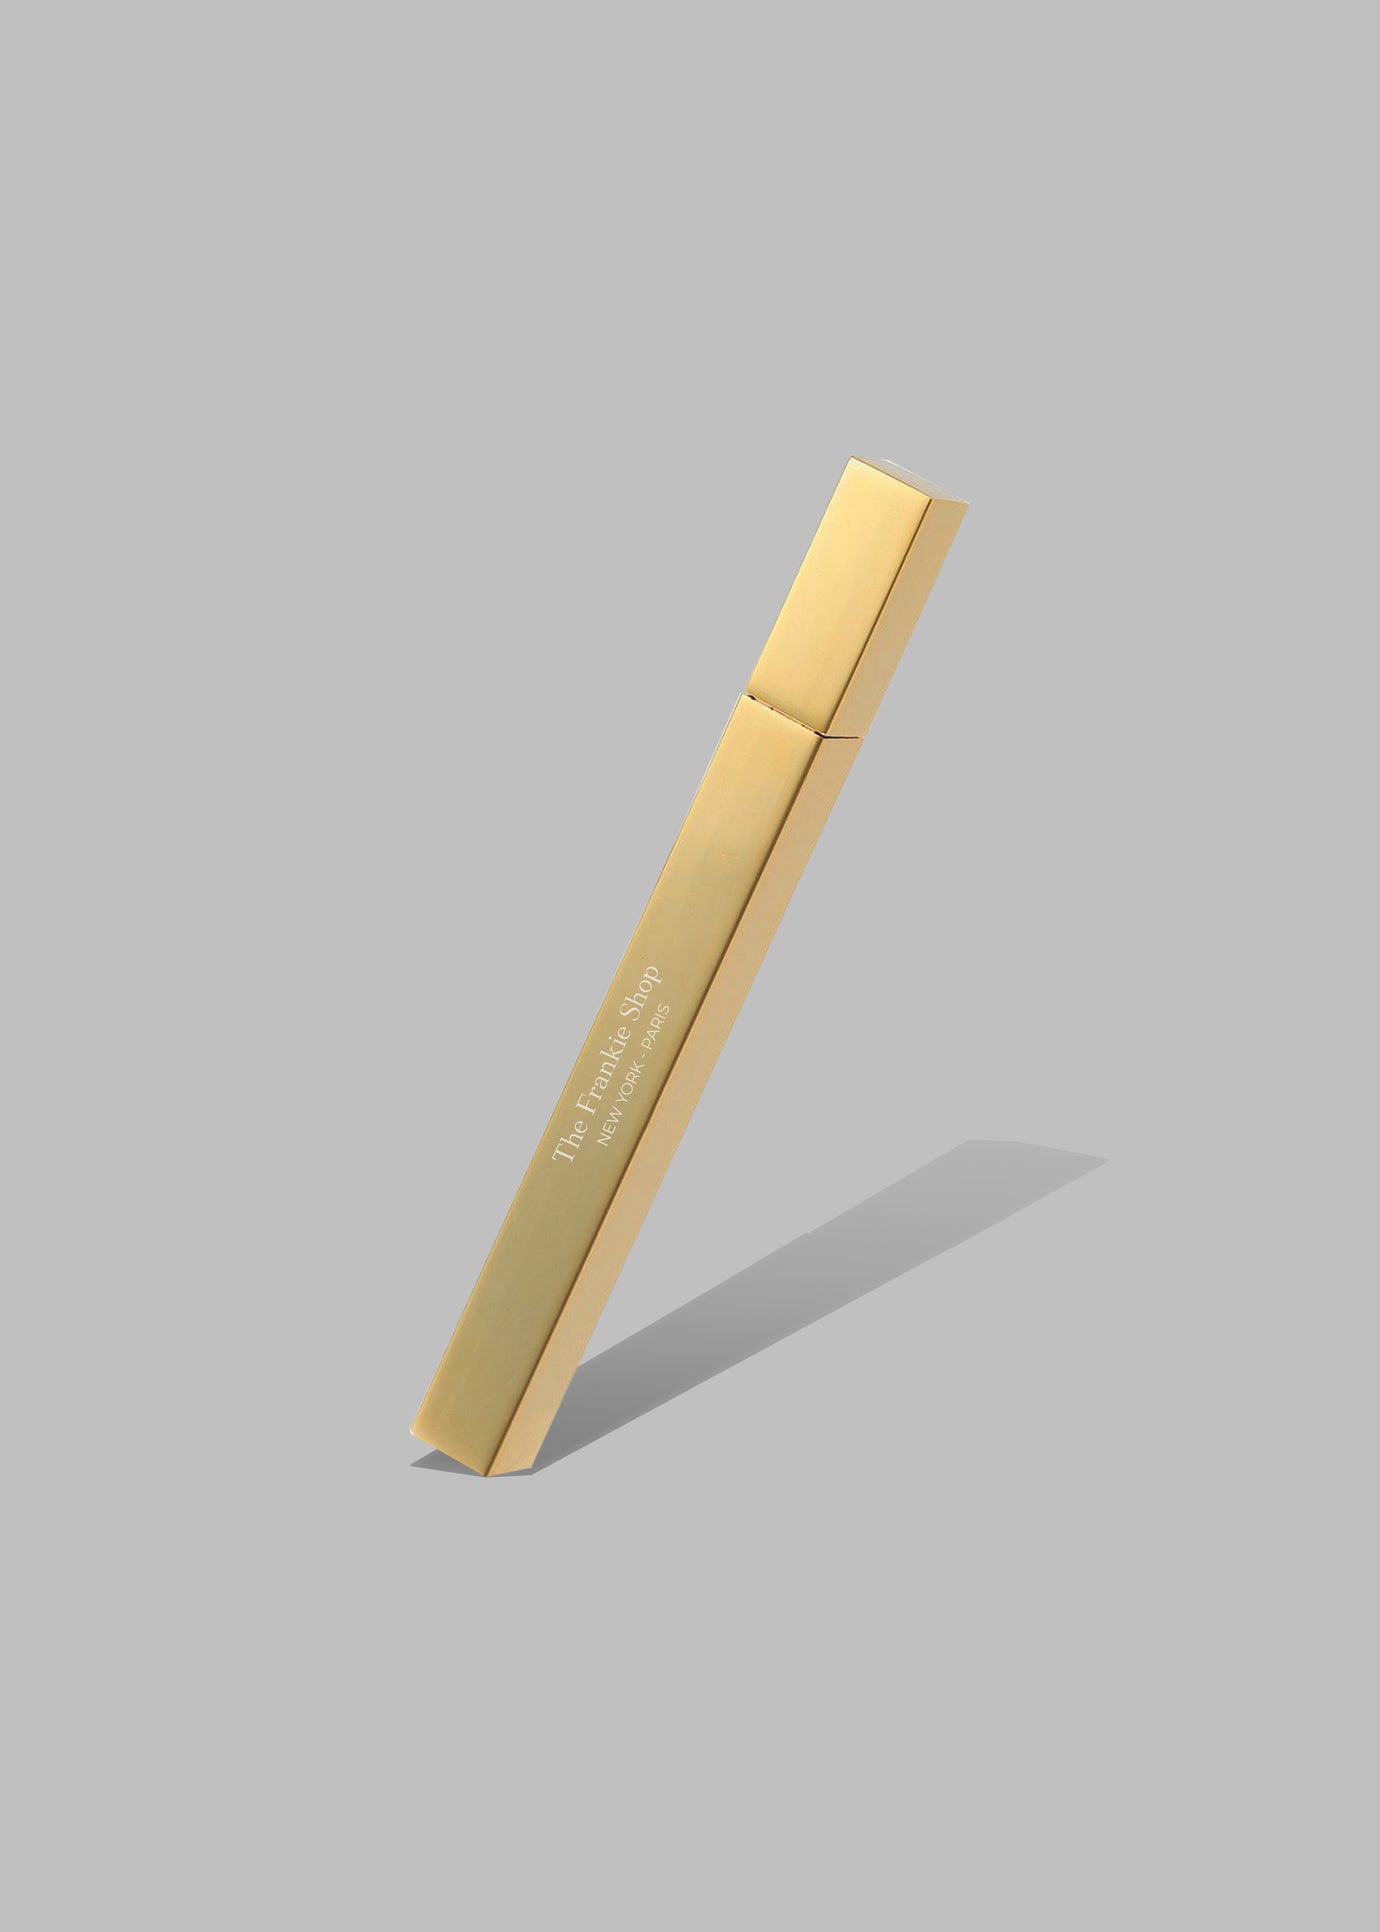 TFS Lighter - Gold